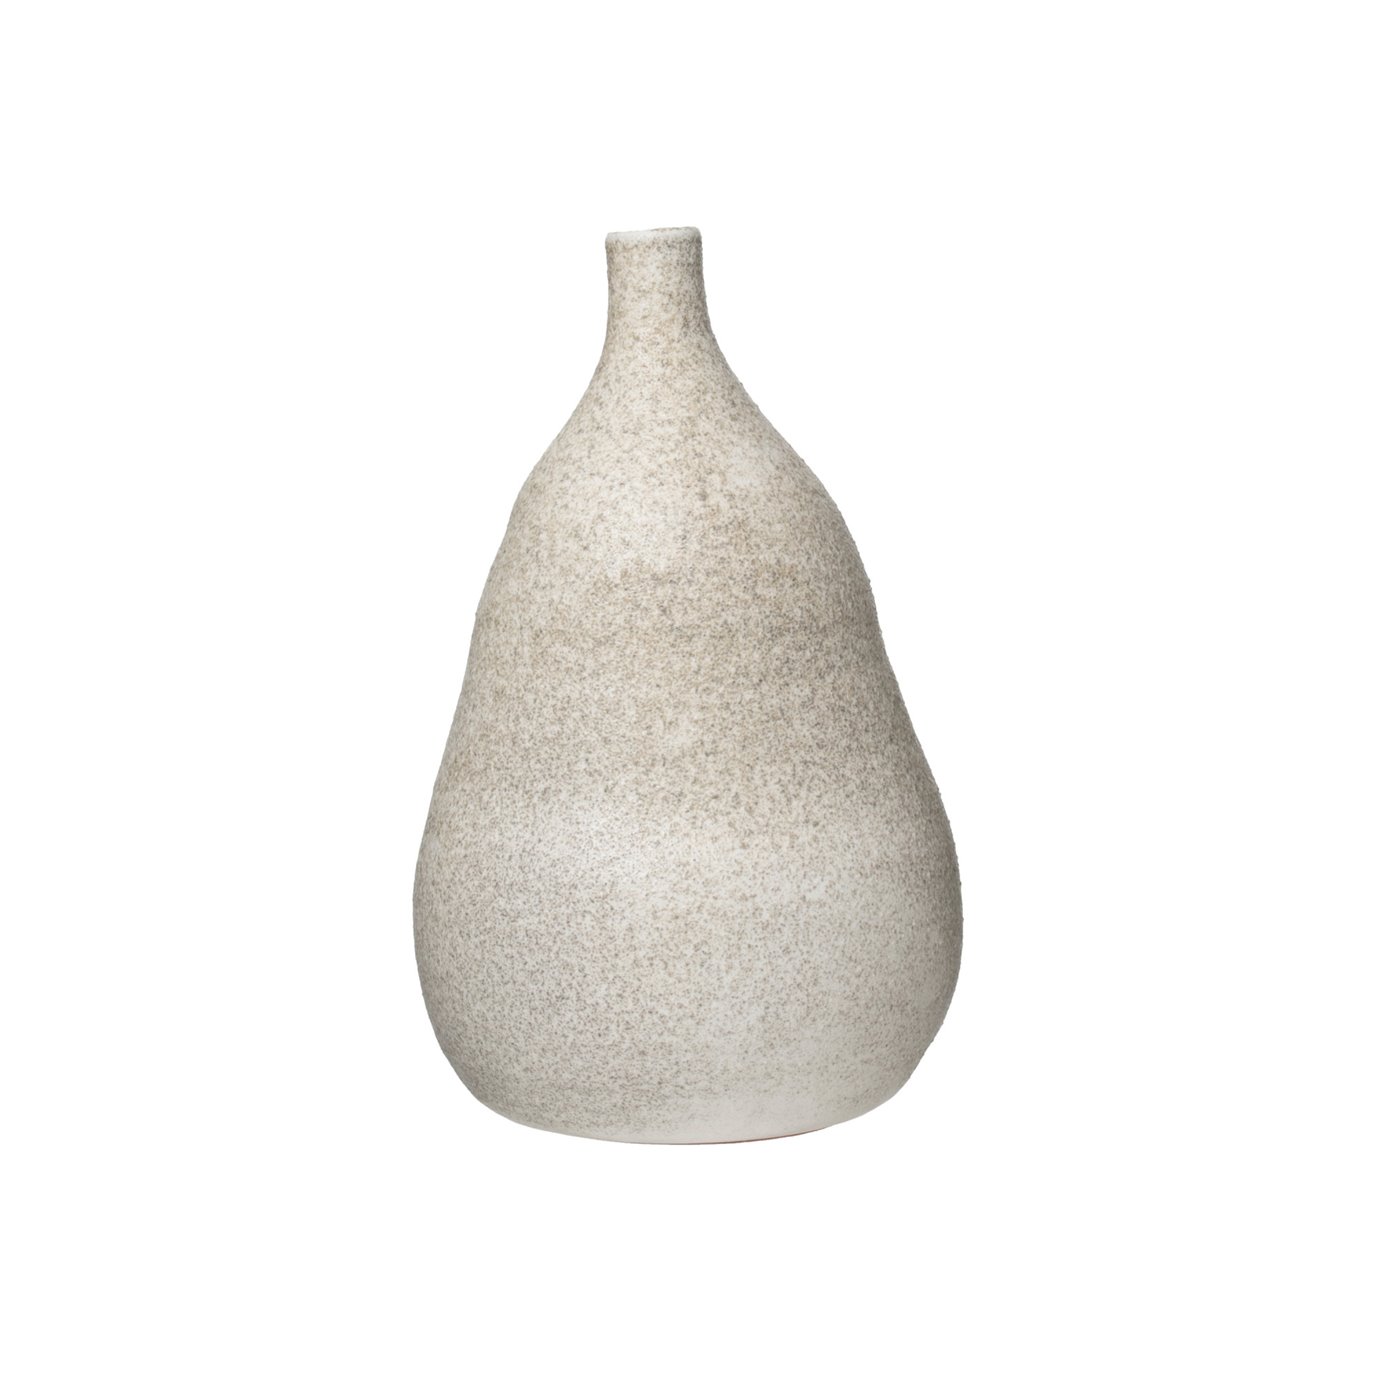 Medium Textured Terracotta Vase with Narrow Top & Distressed Finish